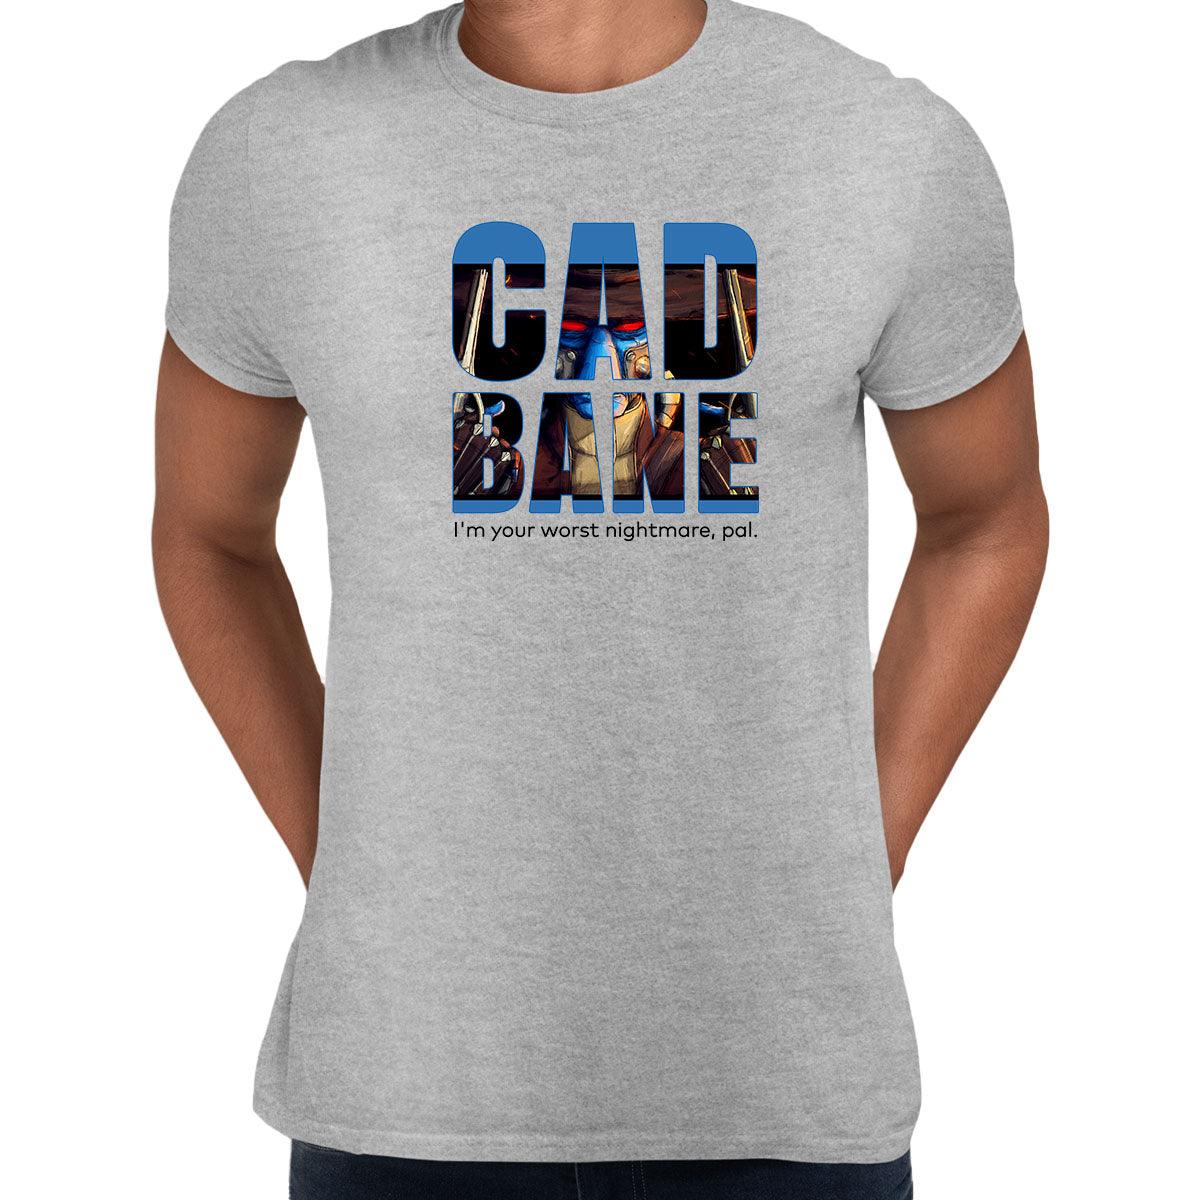 Cad Bane Bounty Hunter t-shirt - Cool t-shirt for Star Wars fans - Kuzi Tees